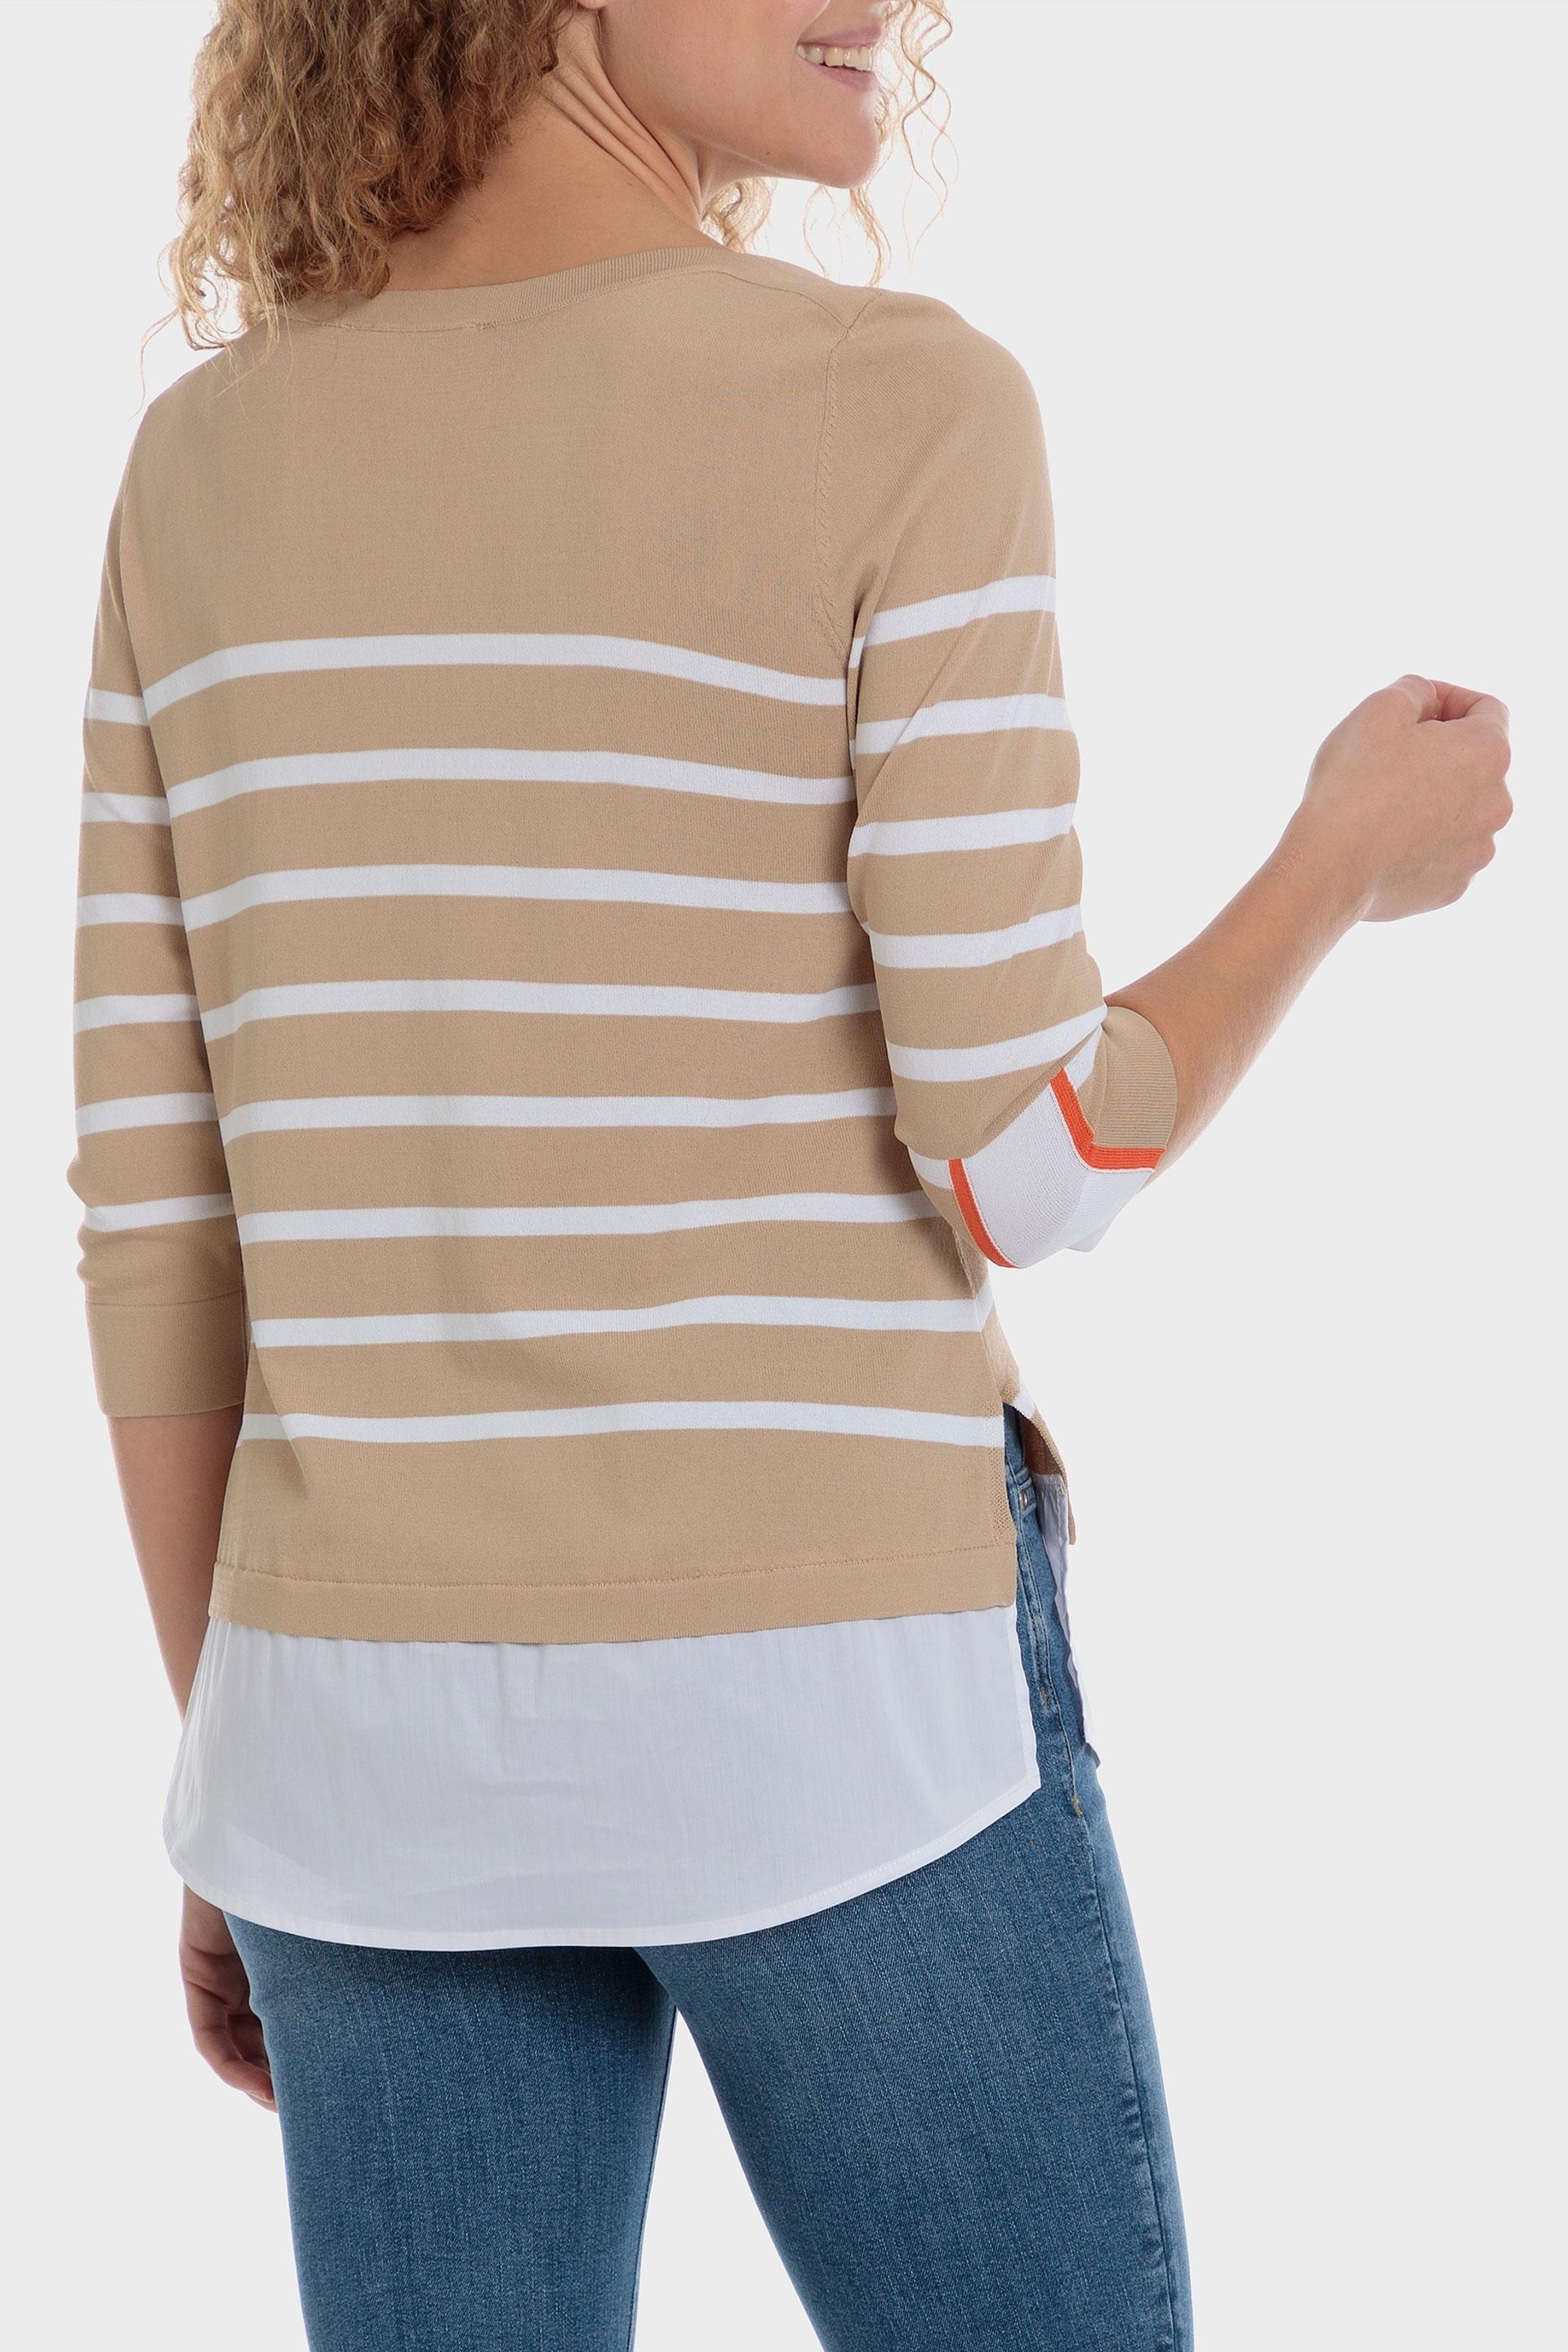 Punt Roma - Beige Striped Sweater